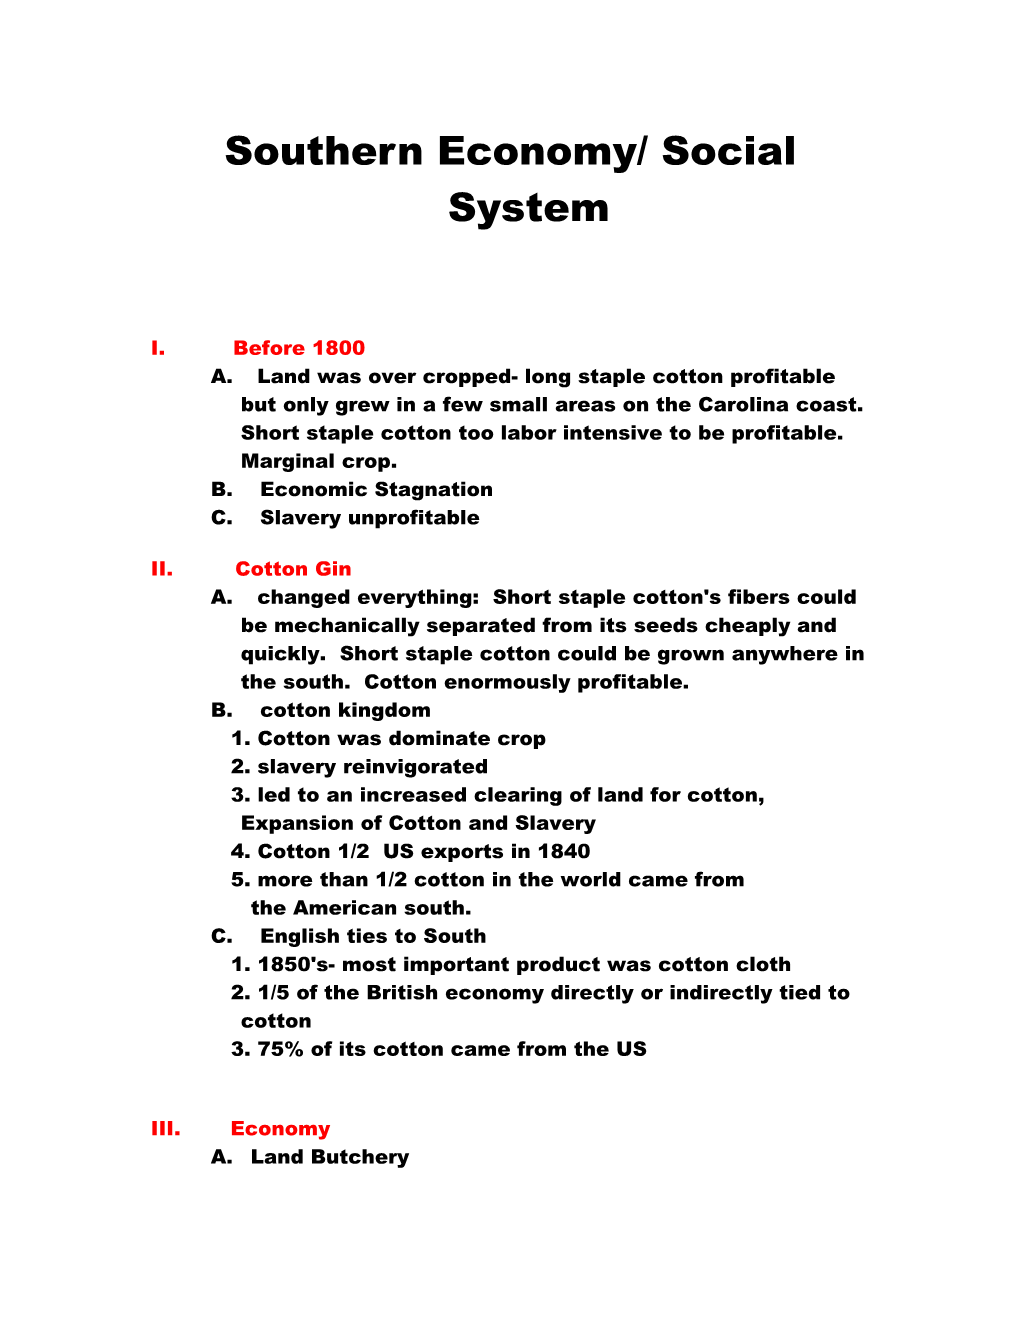 Southern Economy/ Social System